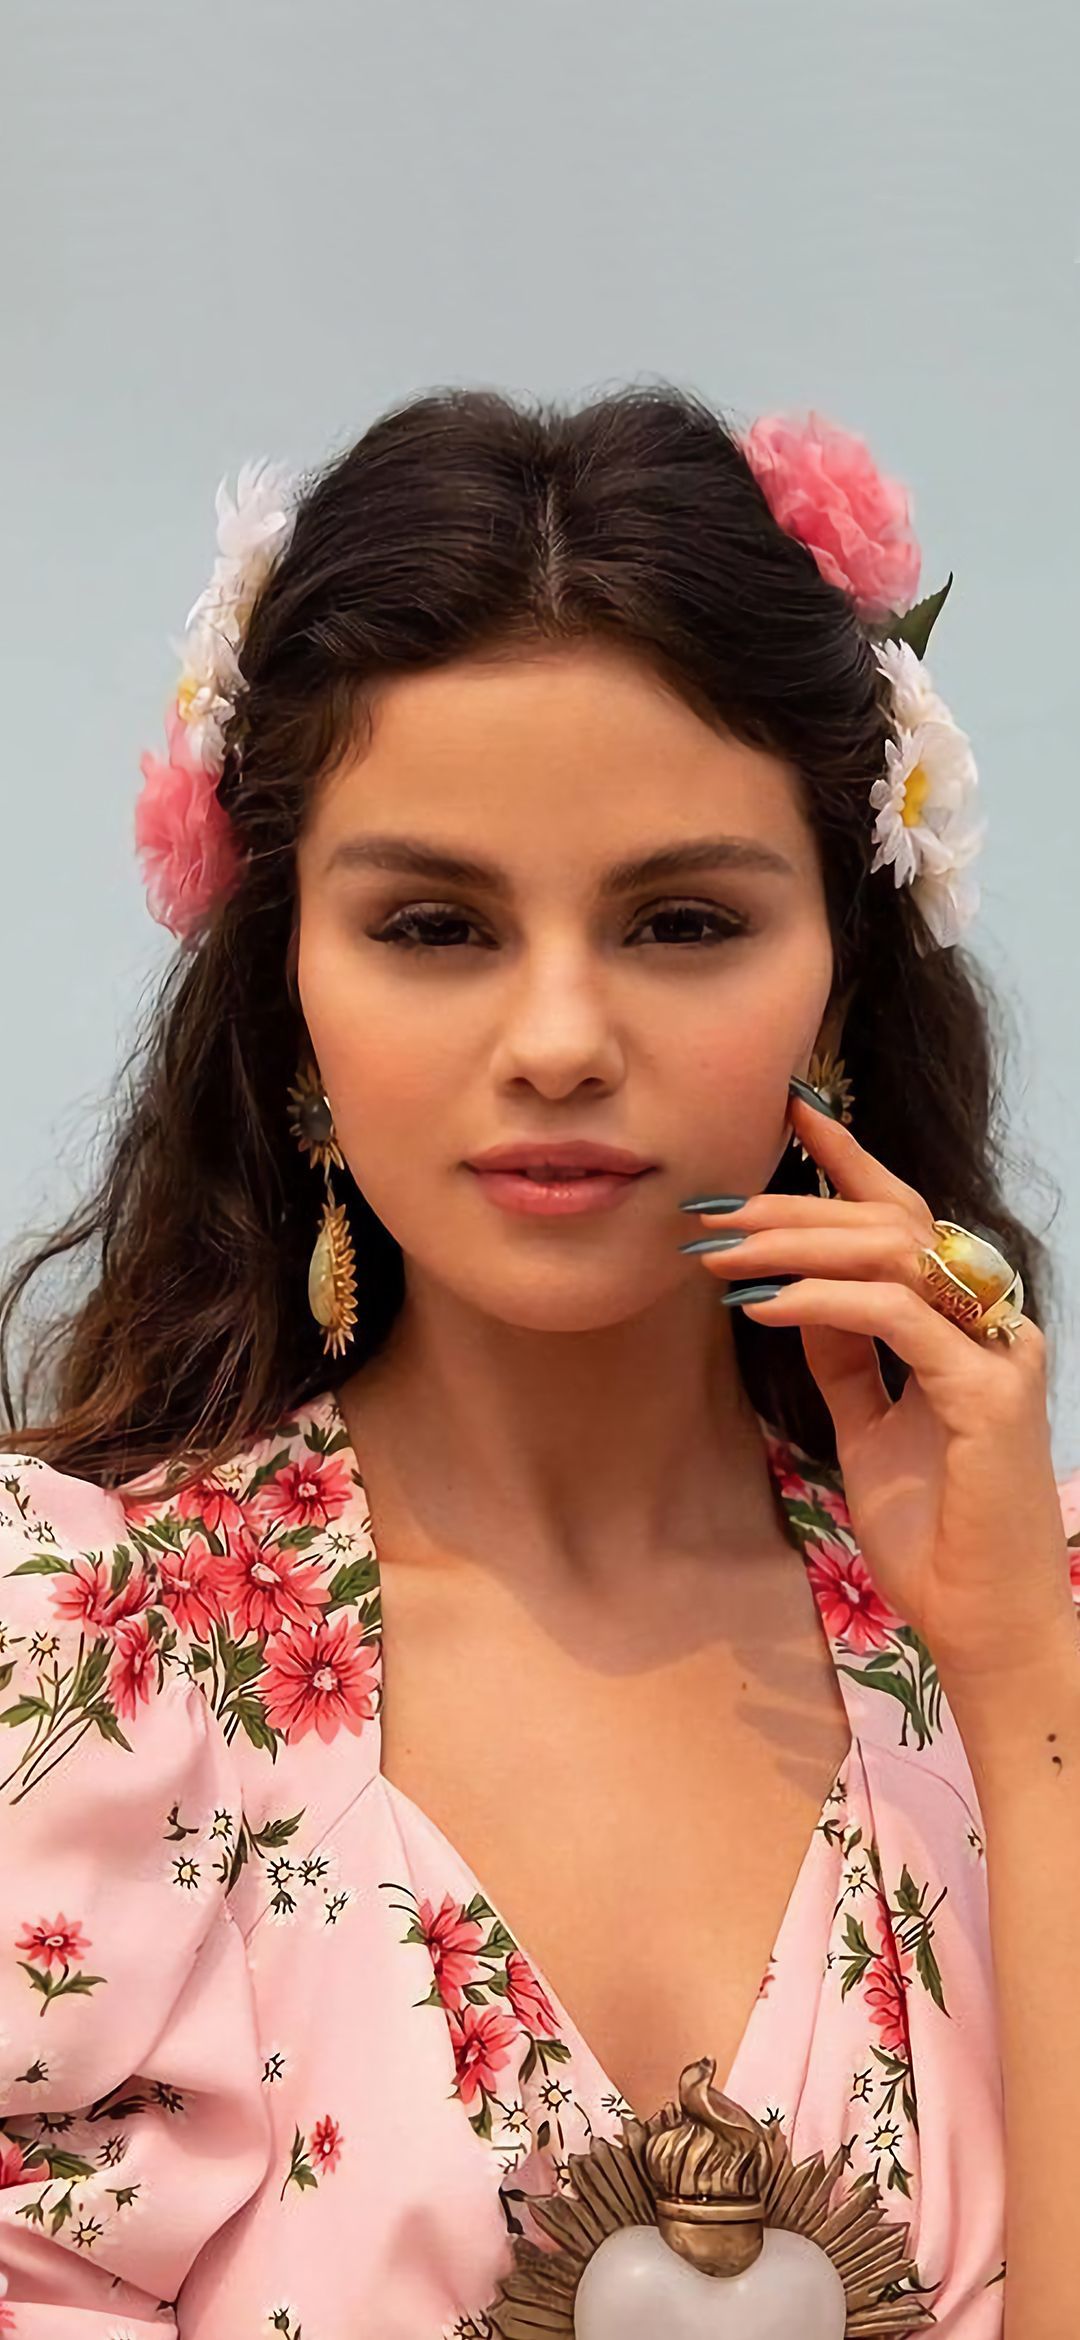 Selena Gomez Photoshoot 2021 Wallpapers